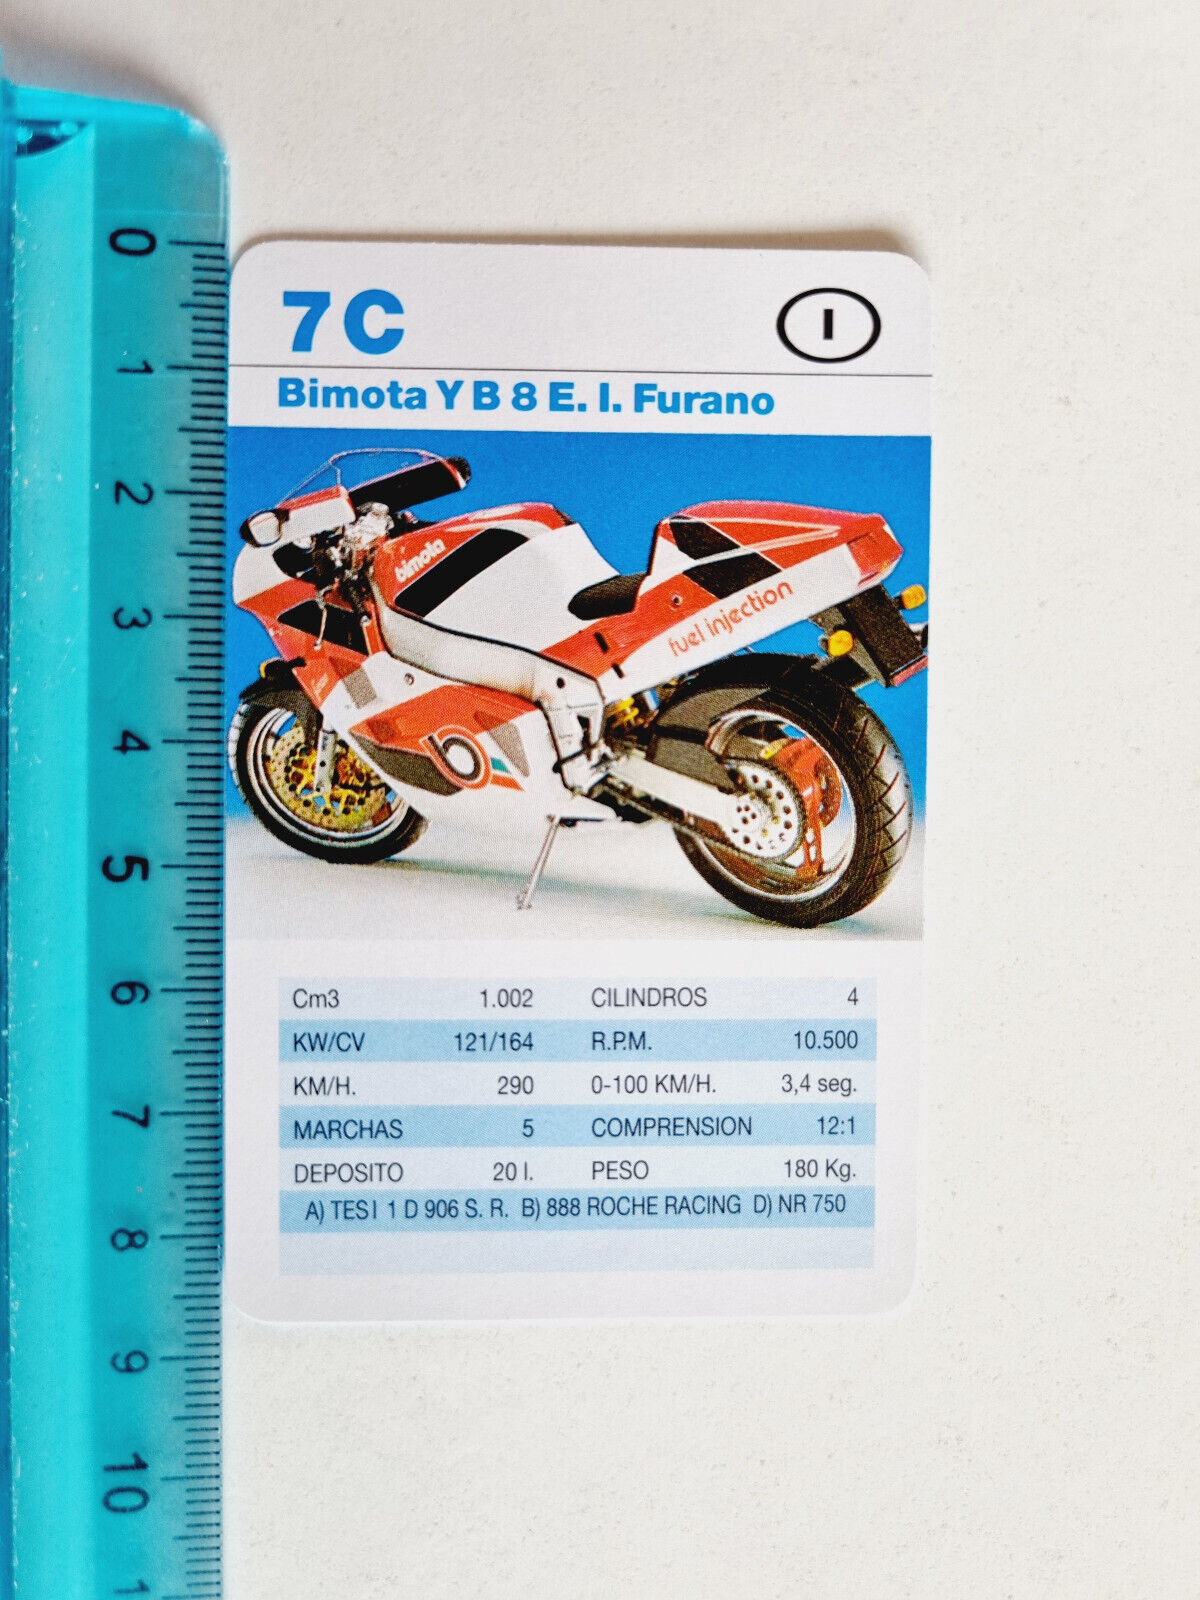 BIMOTA Y B 8 FURANO CARD RARE MOTORCYCLE MOTOS FURNIER ORIGINAL GAME CARDS NEW